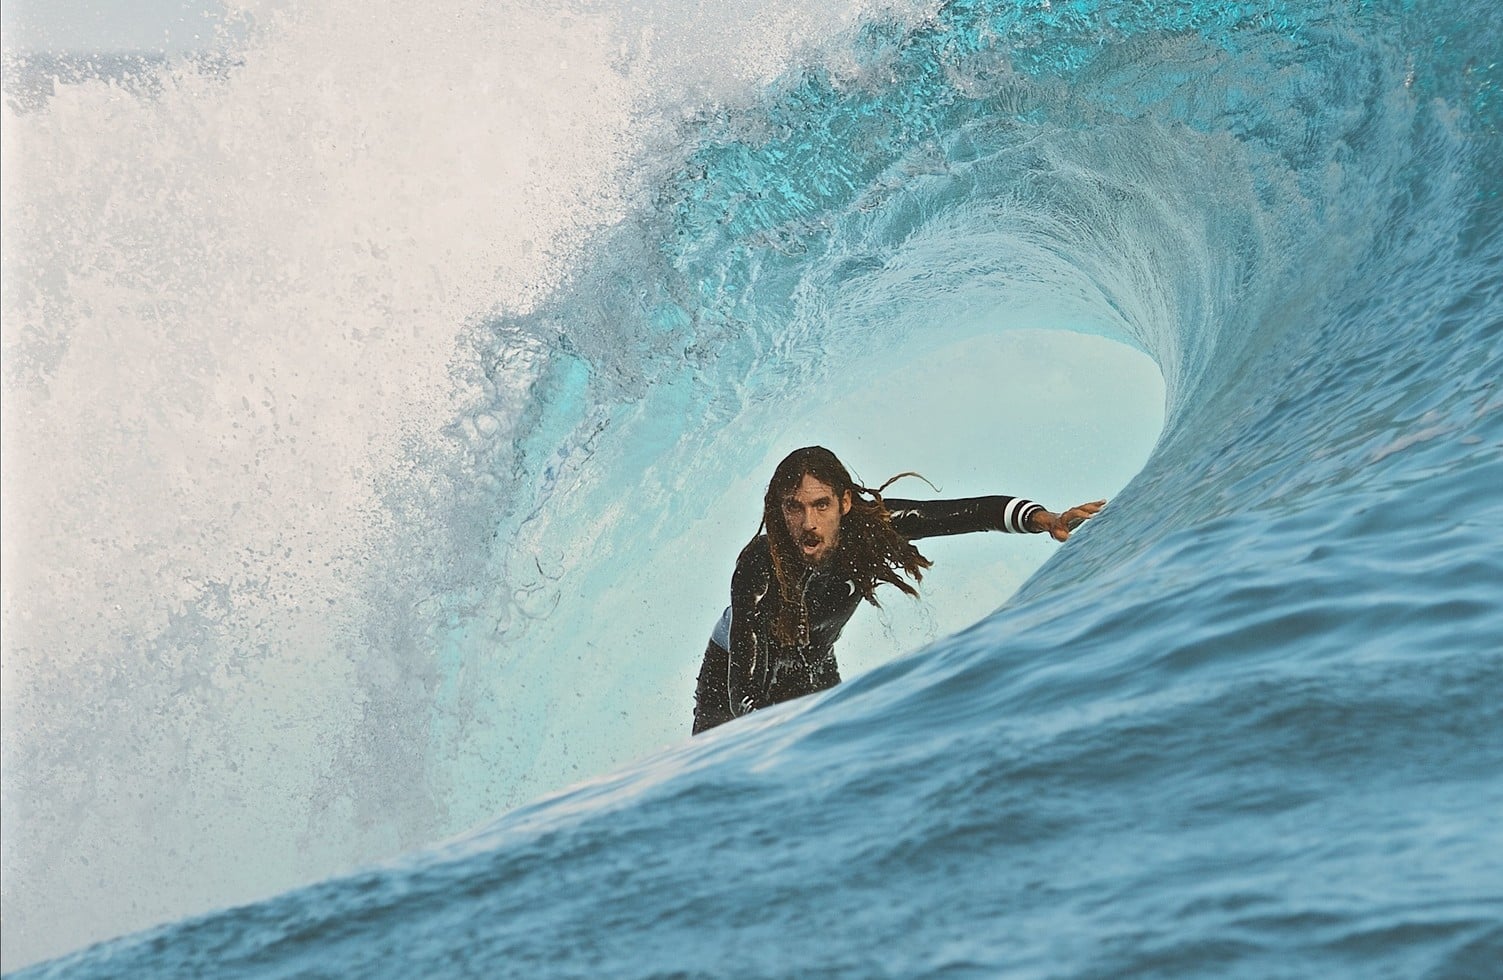 camila neves surf photographer 4 1